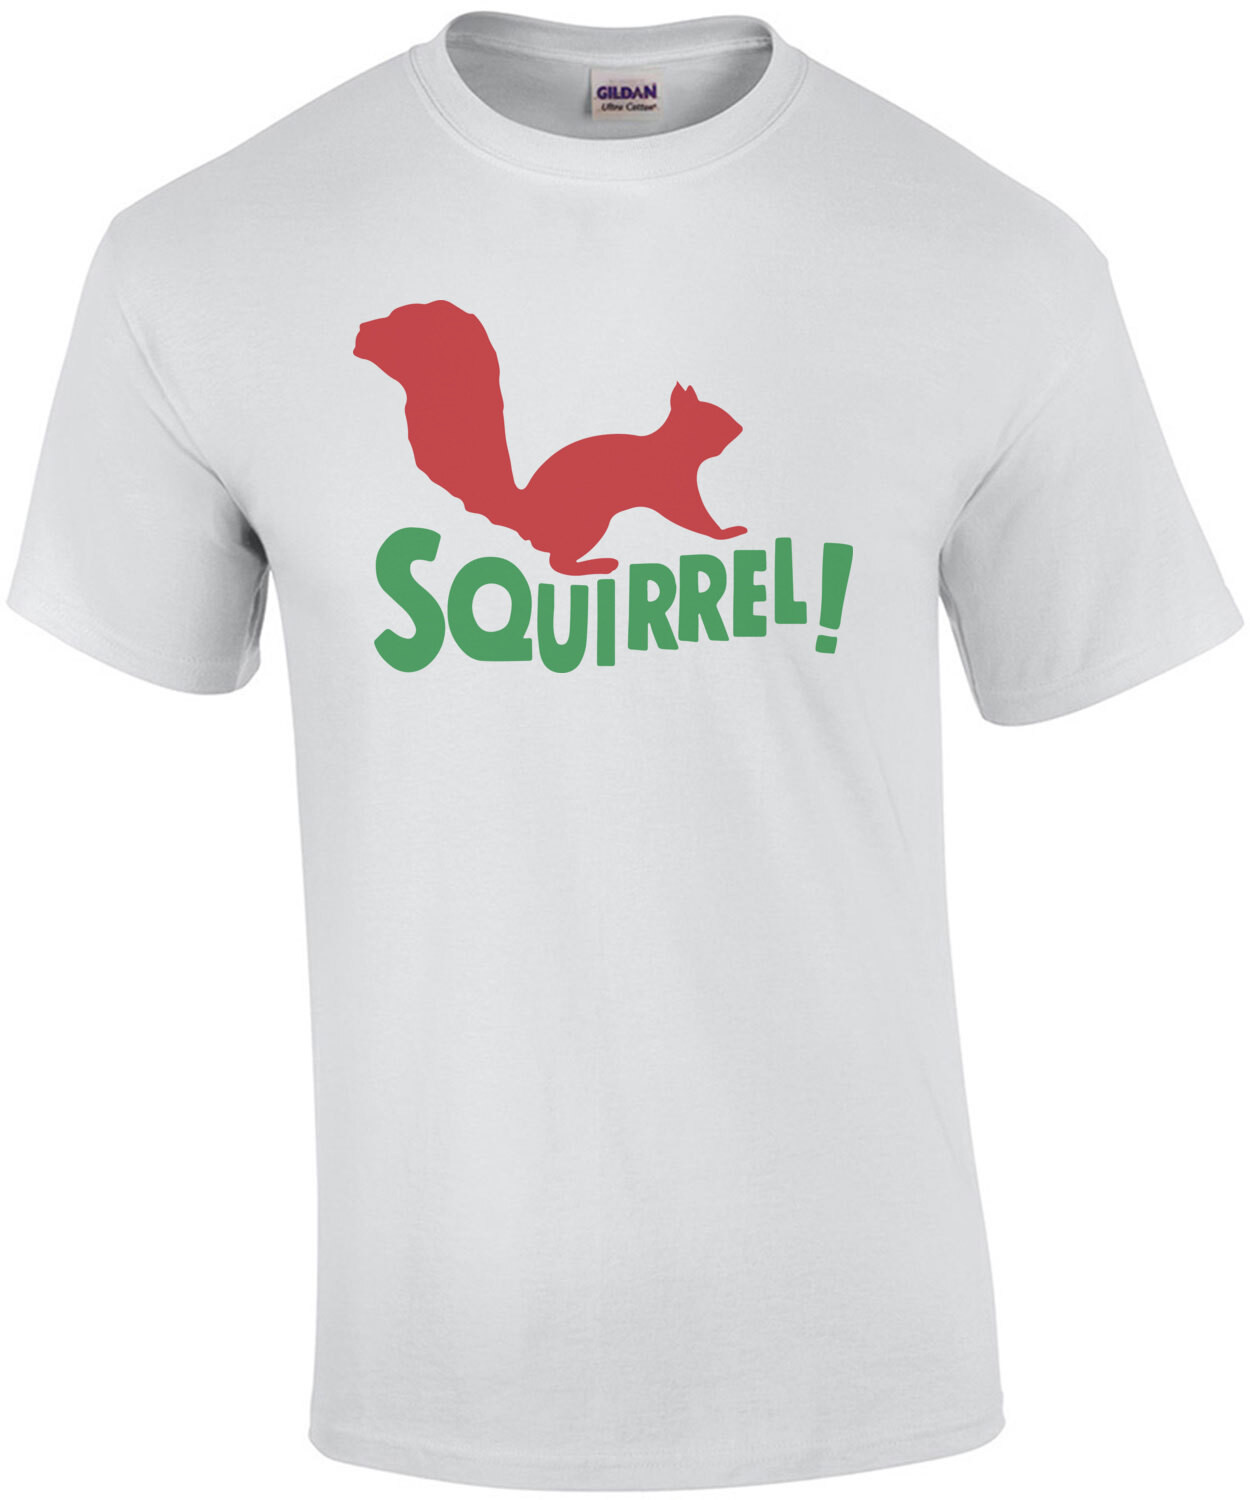 Squirrel! - Christmas Vacation T-Shirt 